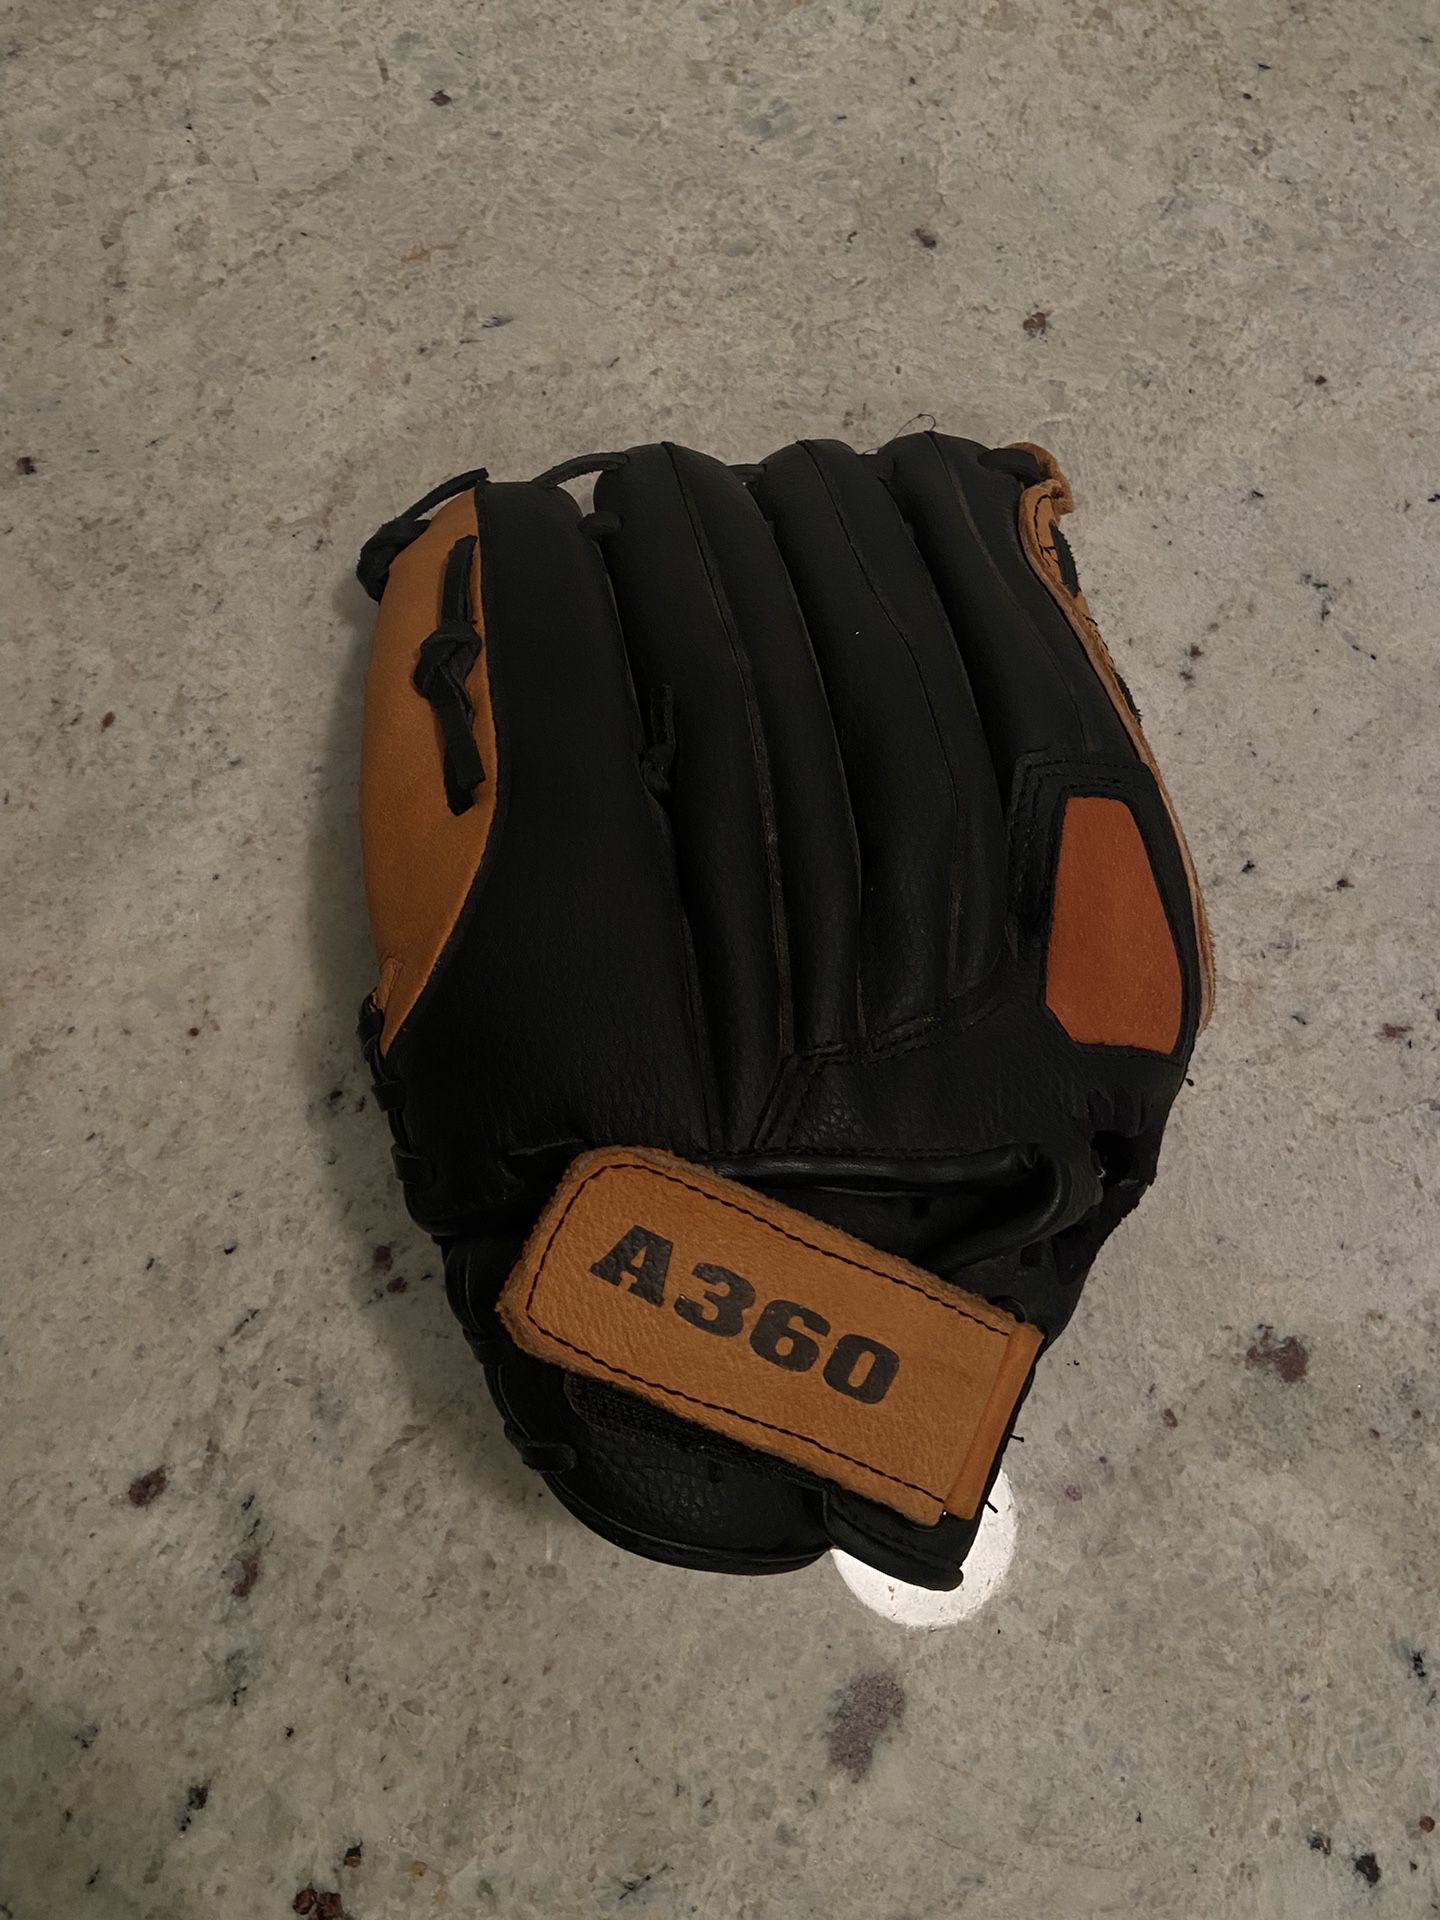 Wilson A0360 ES13 Leather Softball/Baseball Glove 13" - A360 - RHT